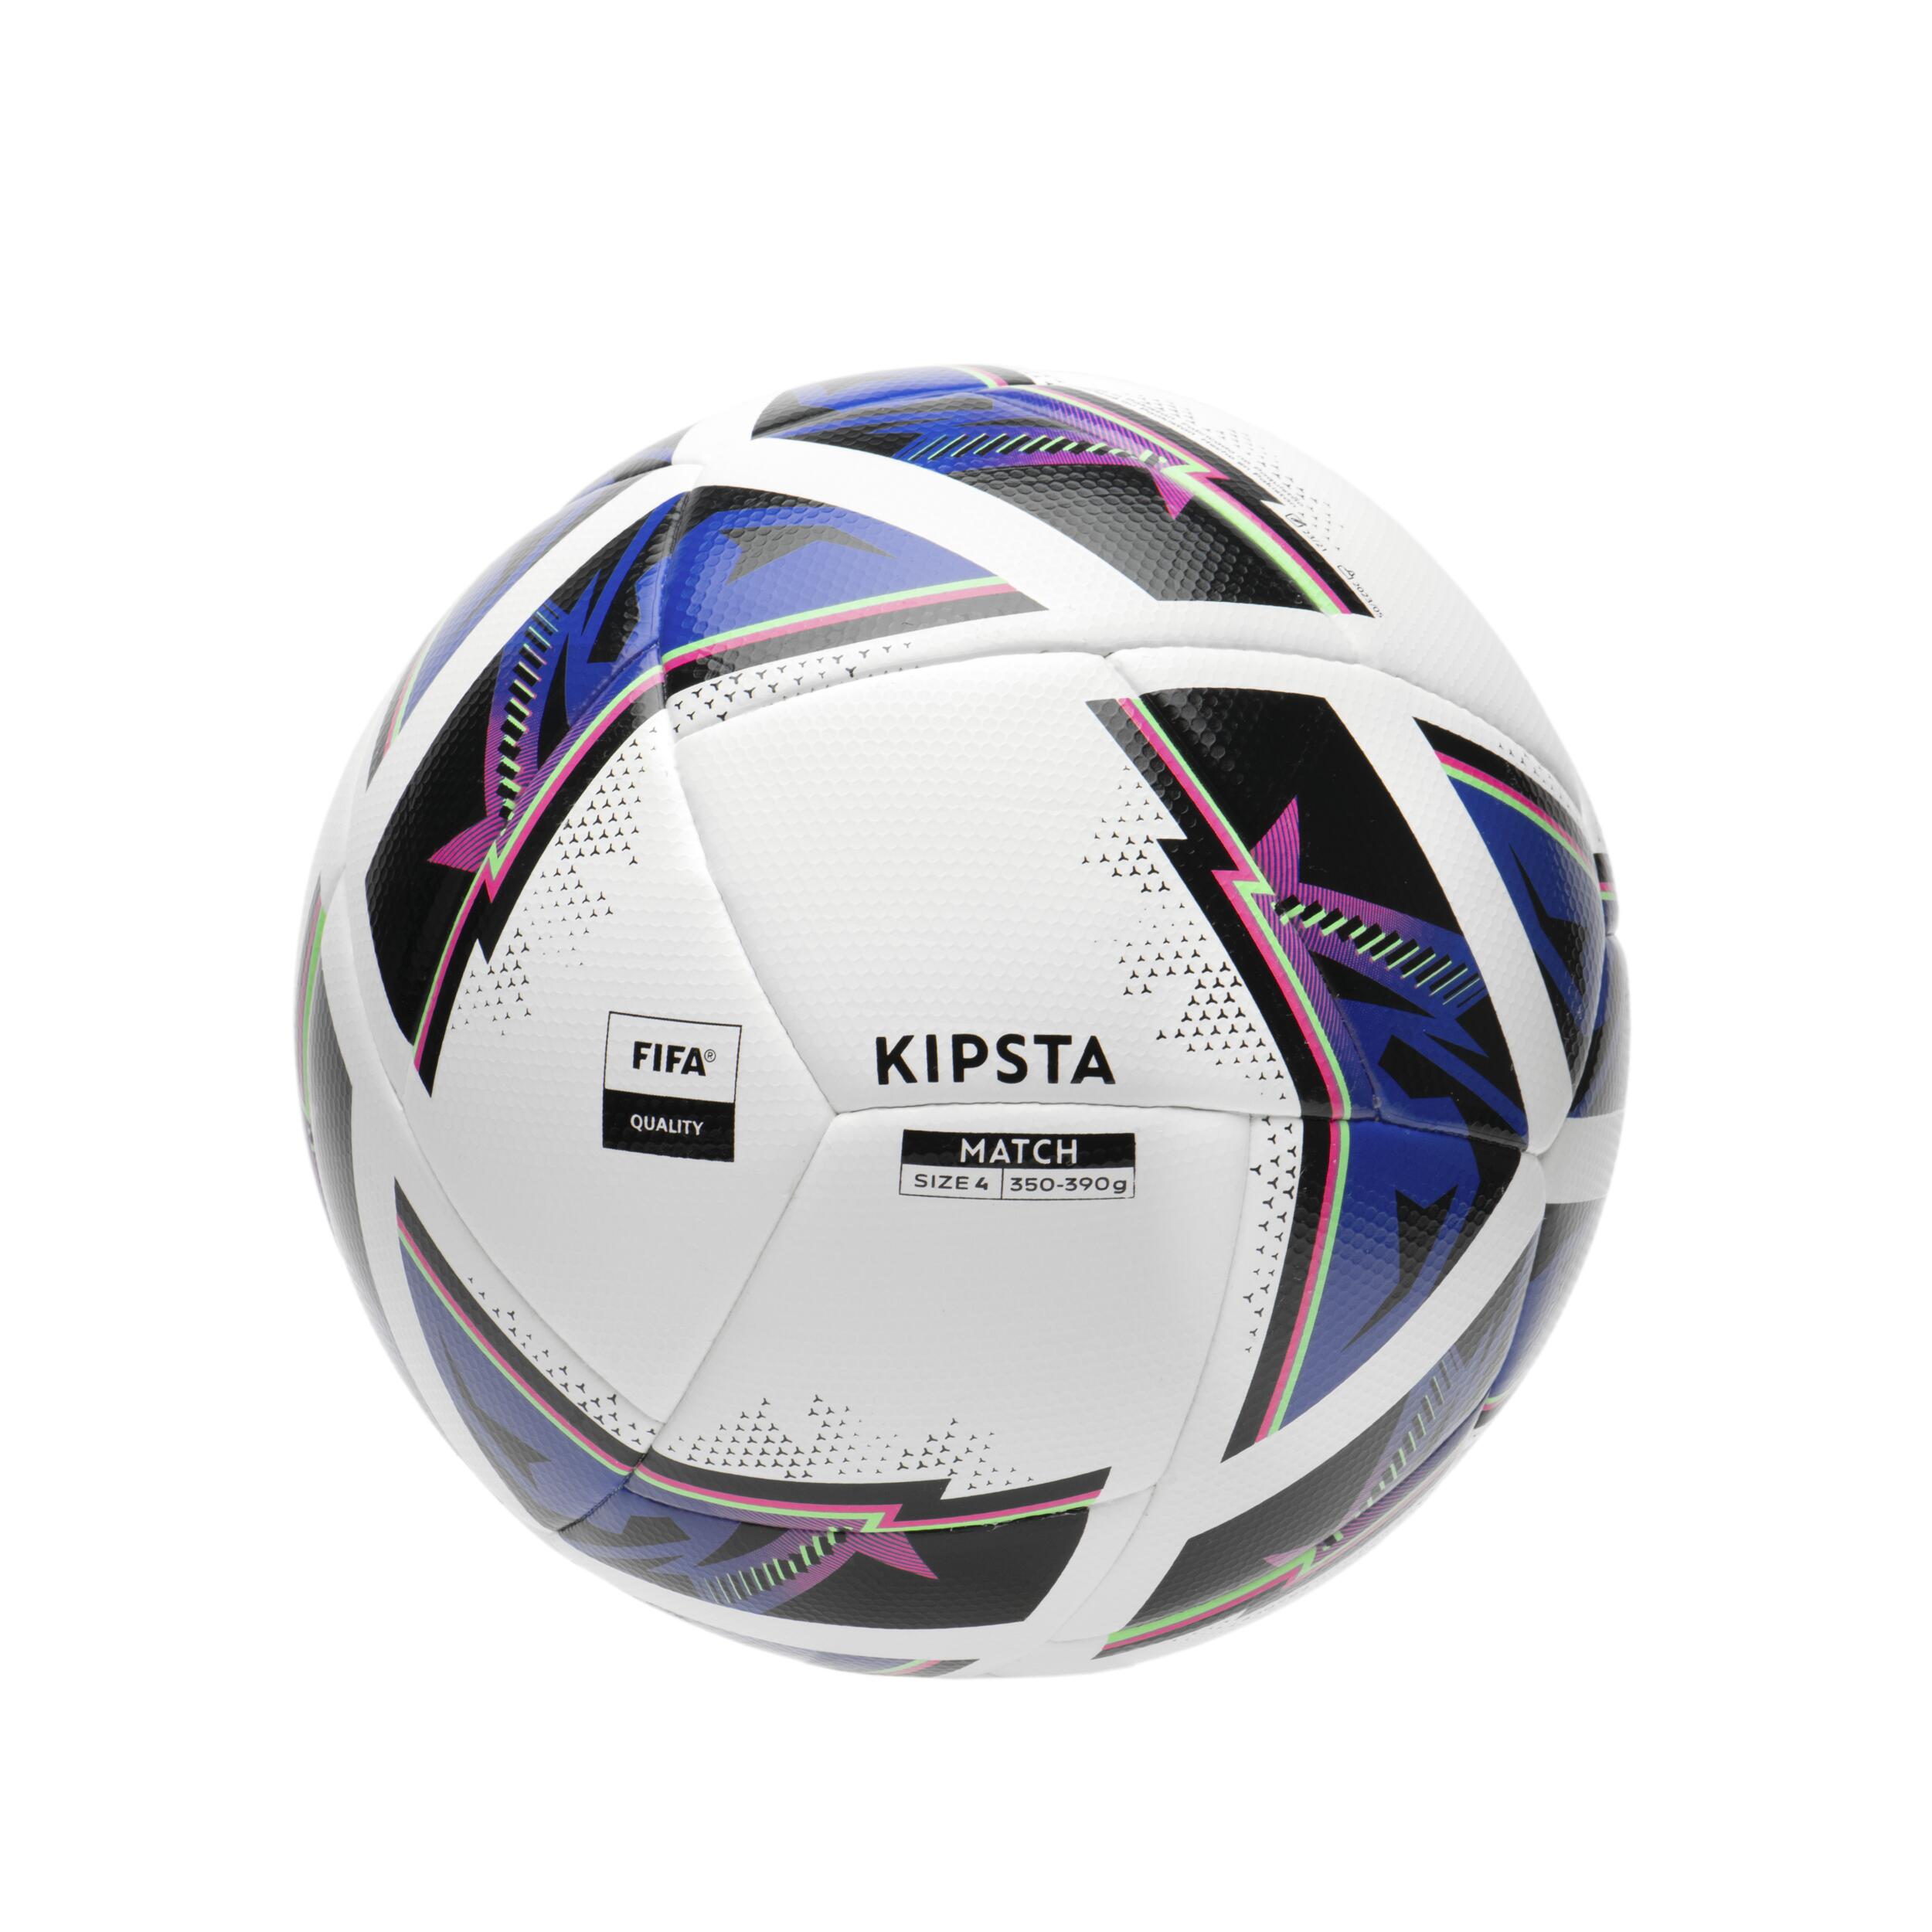 Kipsta Size 4 Fifa Quality Football Hybrid 2 Match Ball - White